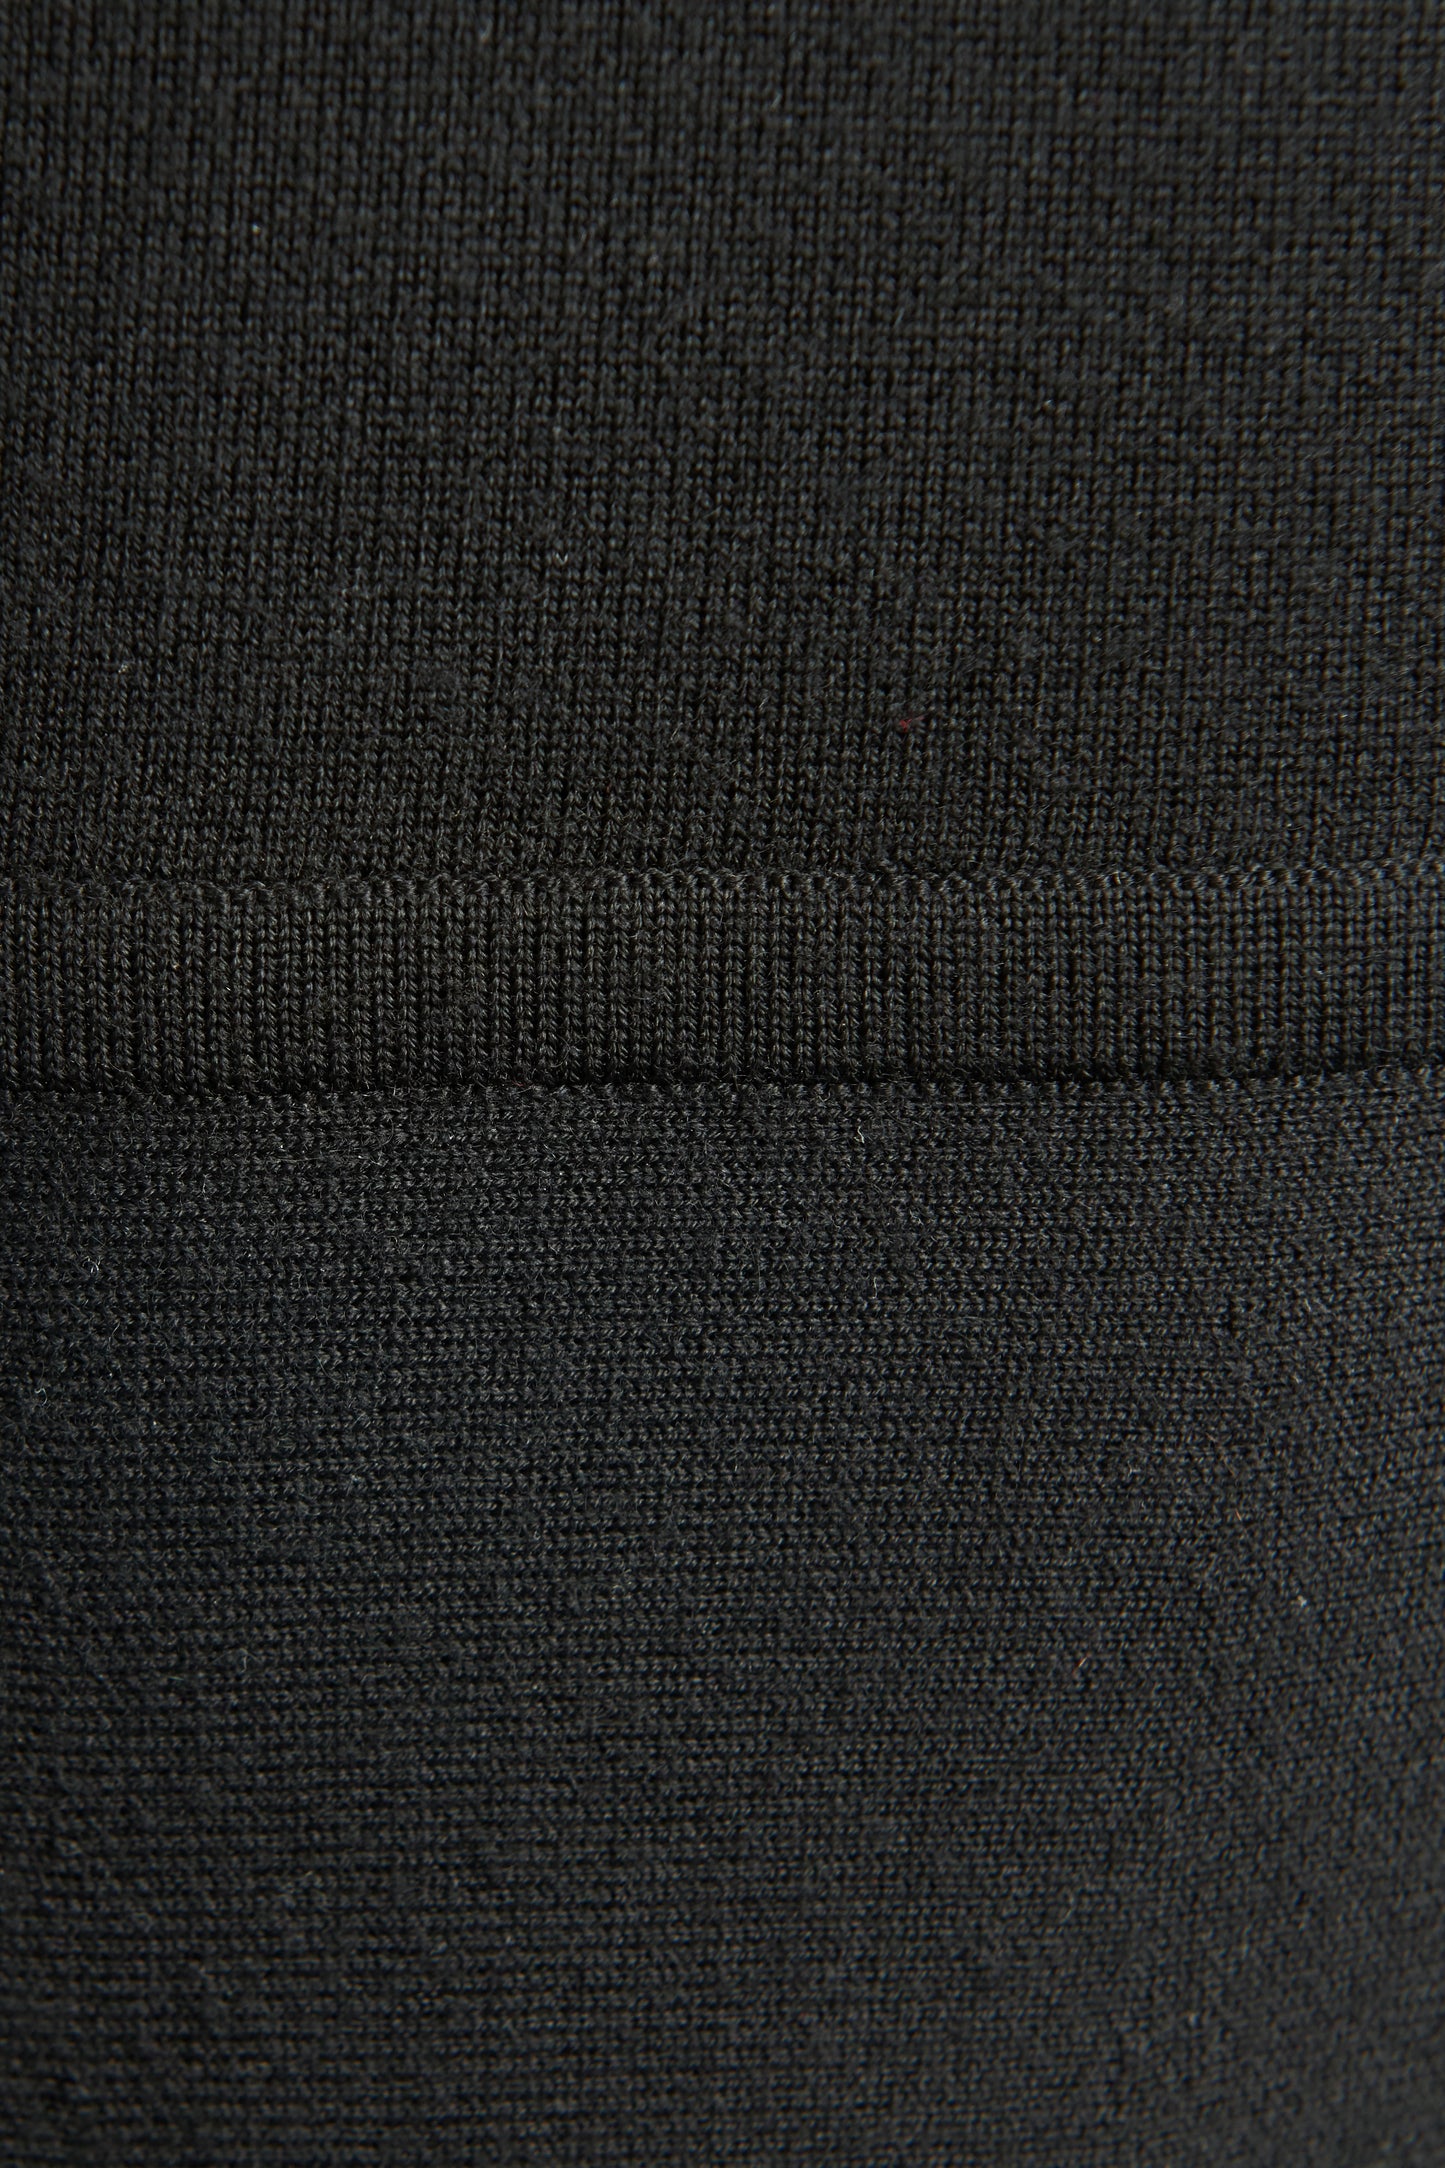 Black Wool, Cashmere & Silk Blend Preowned Seymore Flare Midi Dress